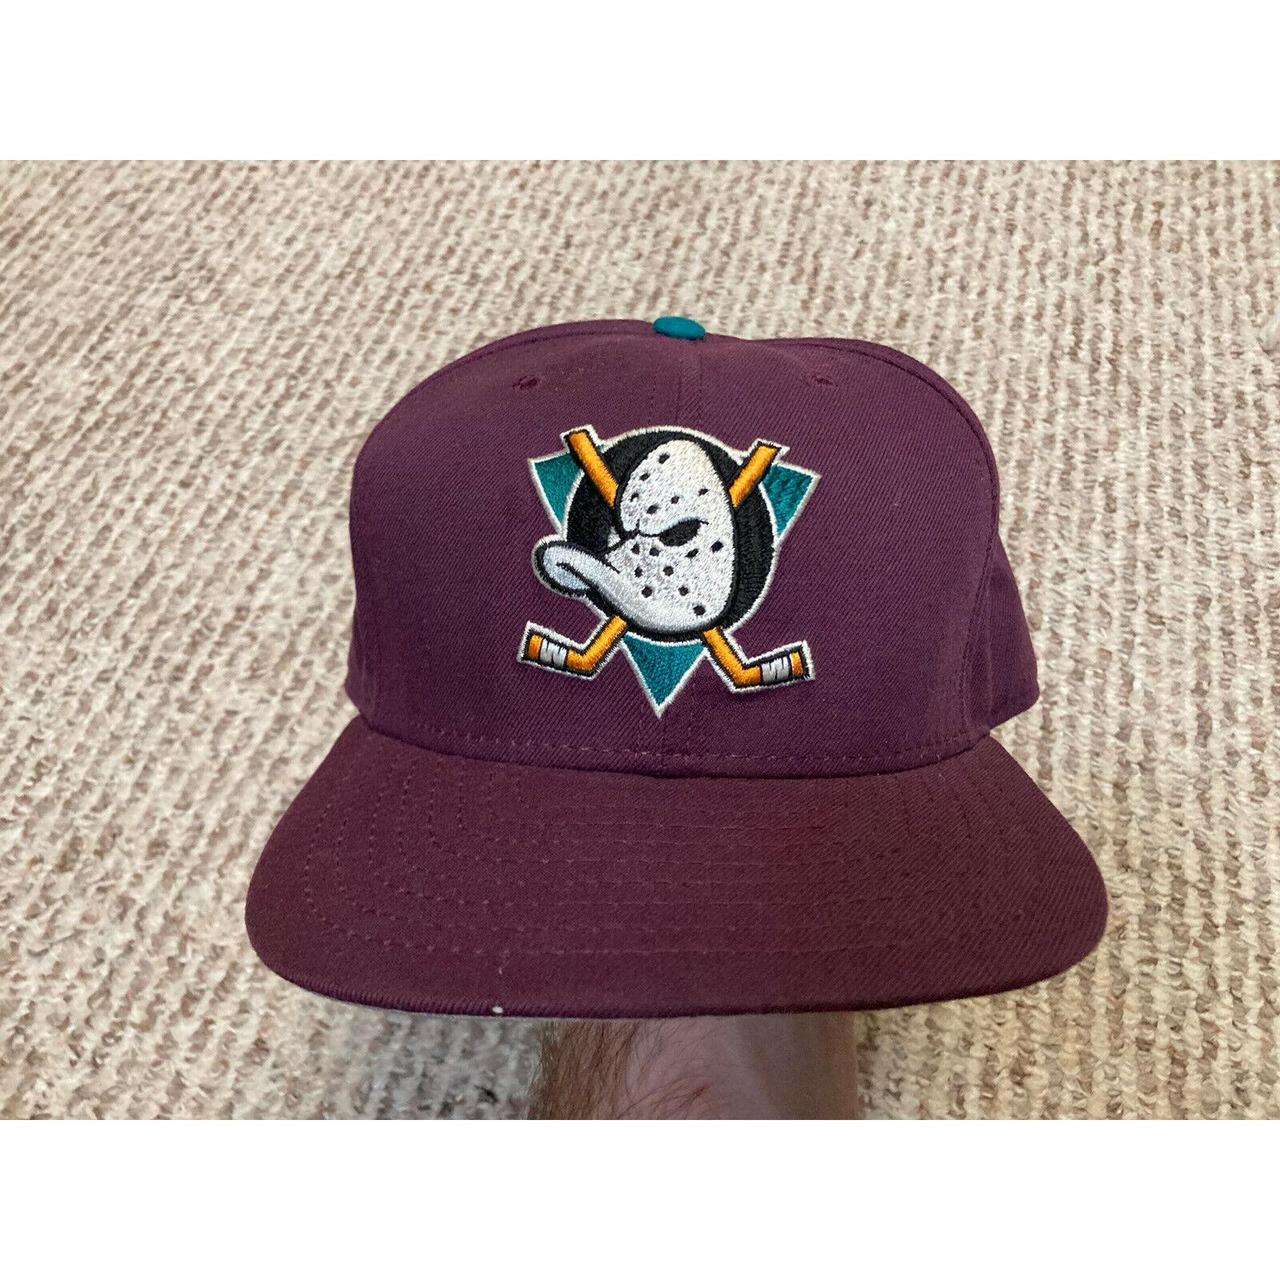 Vintage 90s Anaheim Mighty Ducks SnapBack - Depop